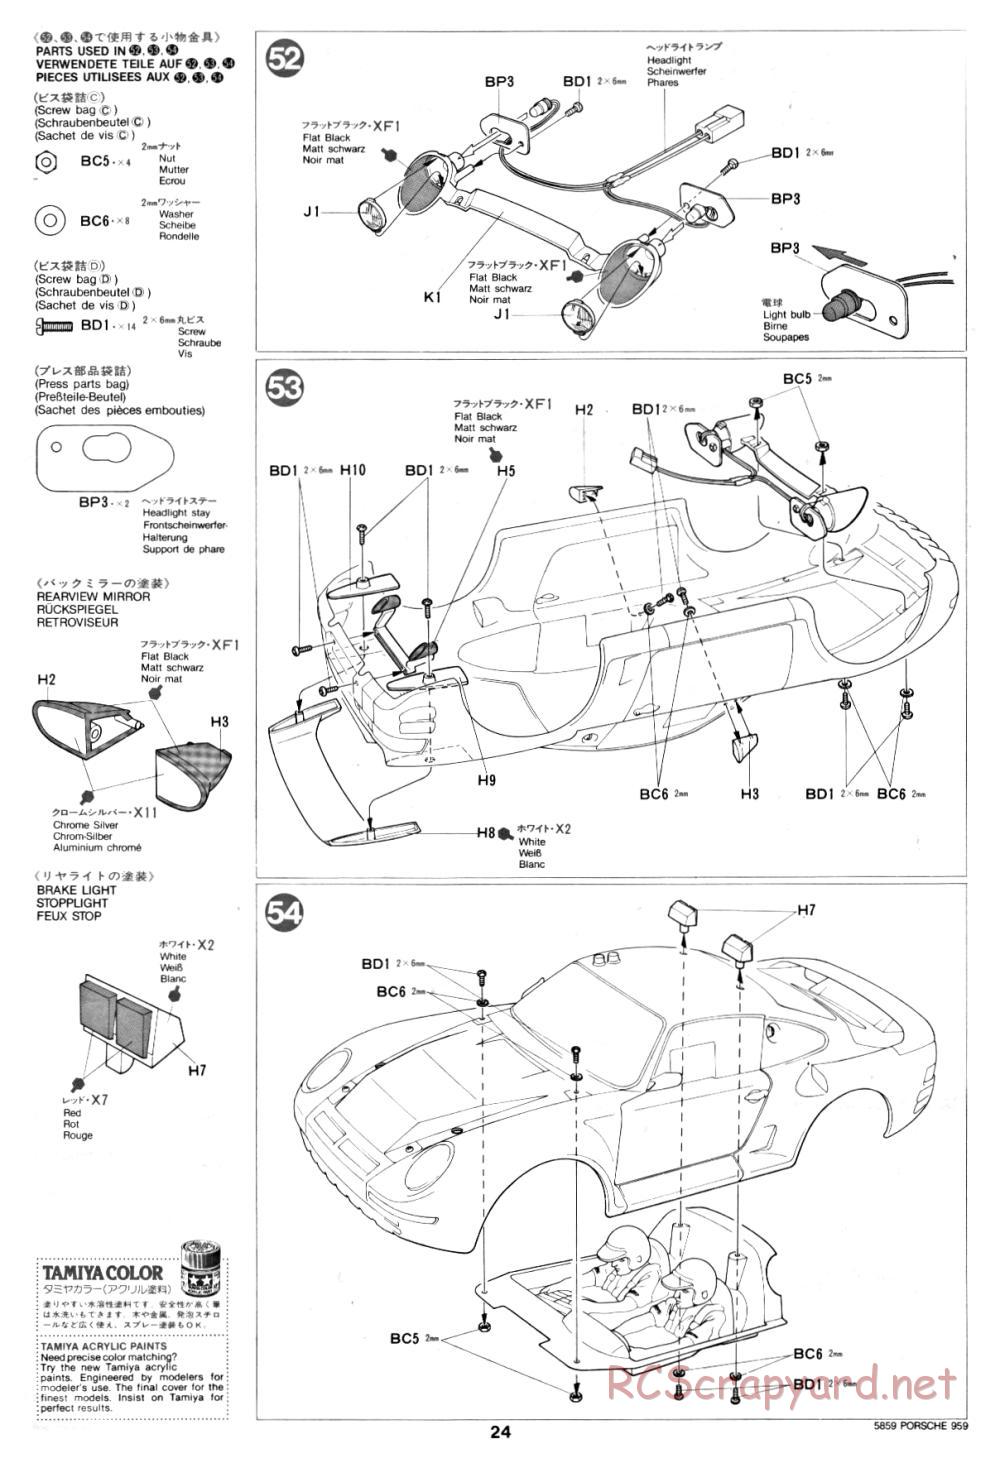 Tamiya - Porsche 959 - 58059 - Manual - Page 24